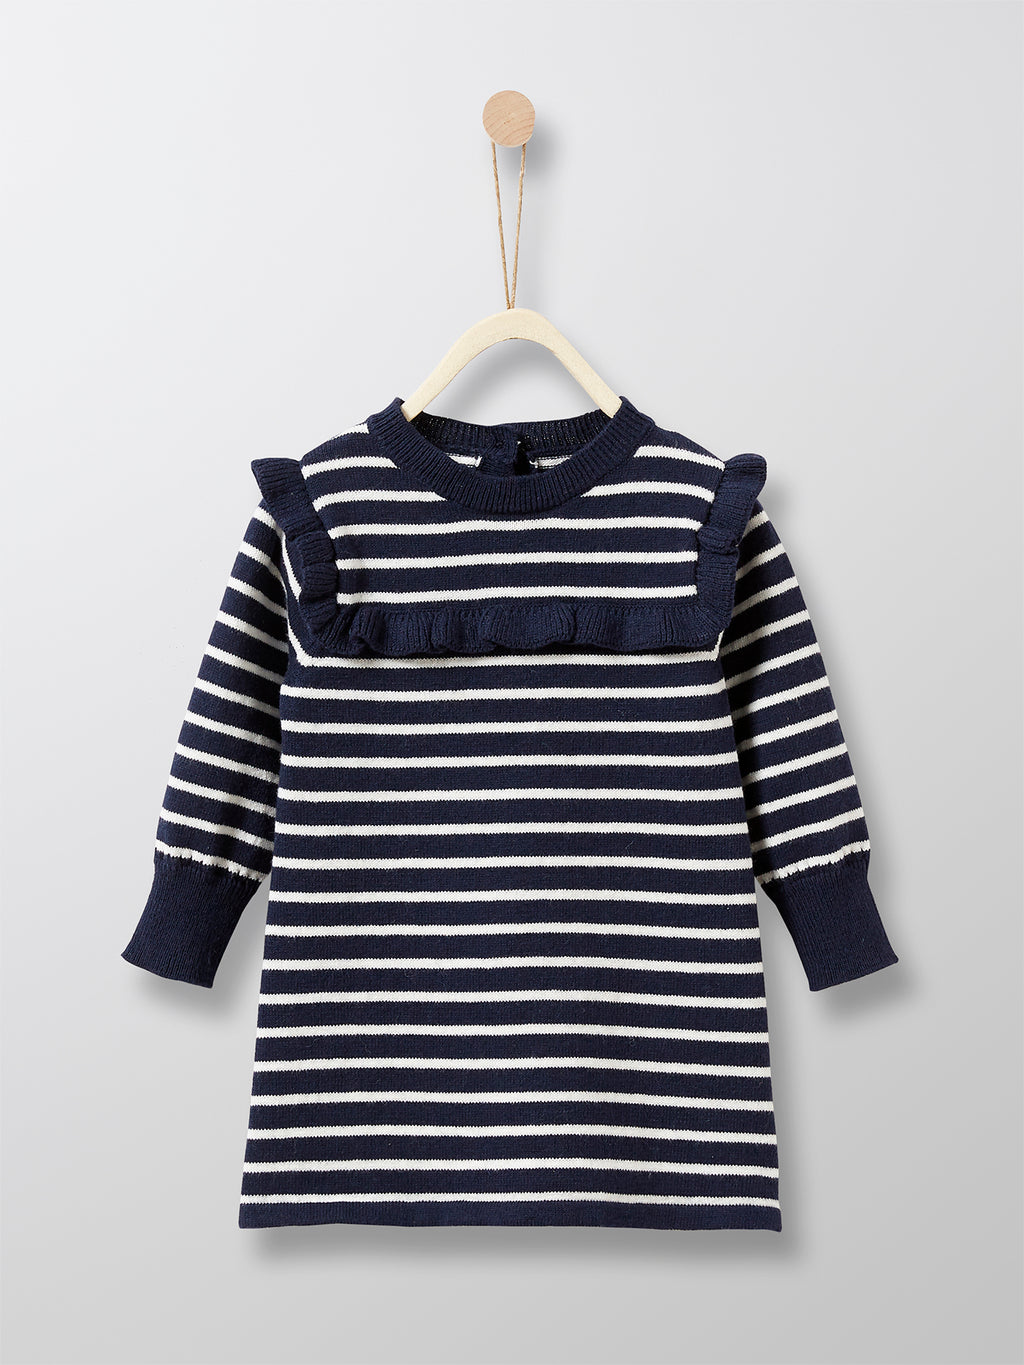 Cyrillus Paris | Girl's Nautical Knit Dress | Cotton + Wool | Sailor Stripes | 1Y, 2Y, 3Y